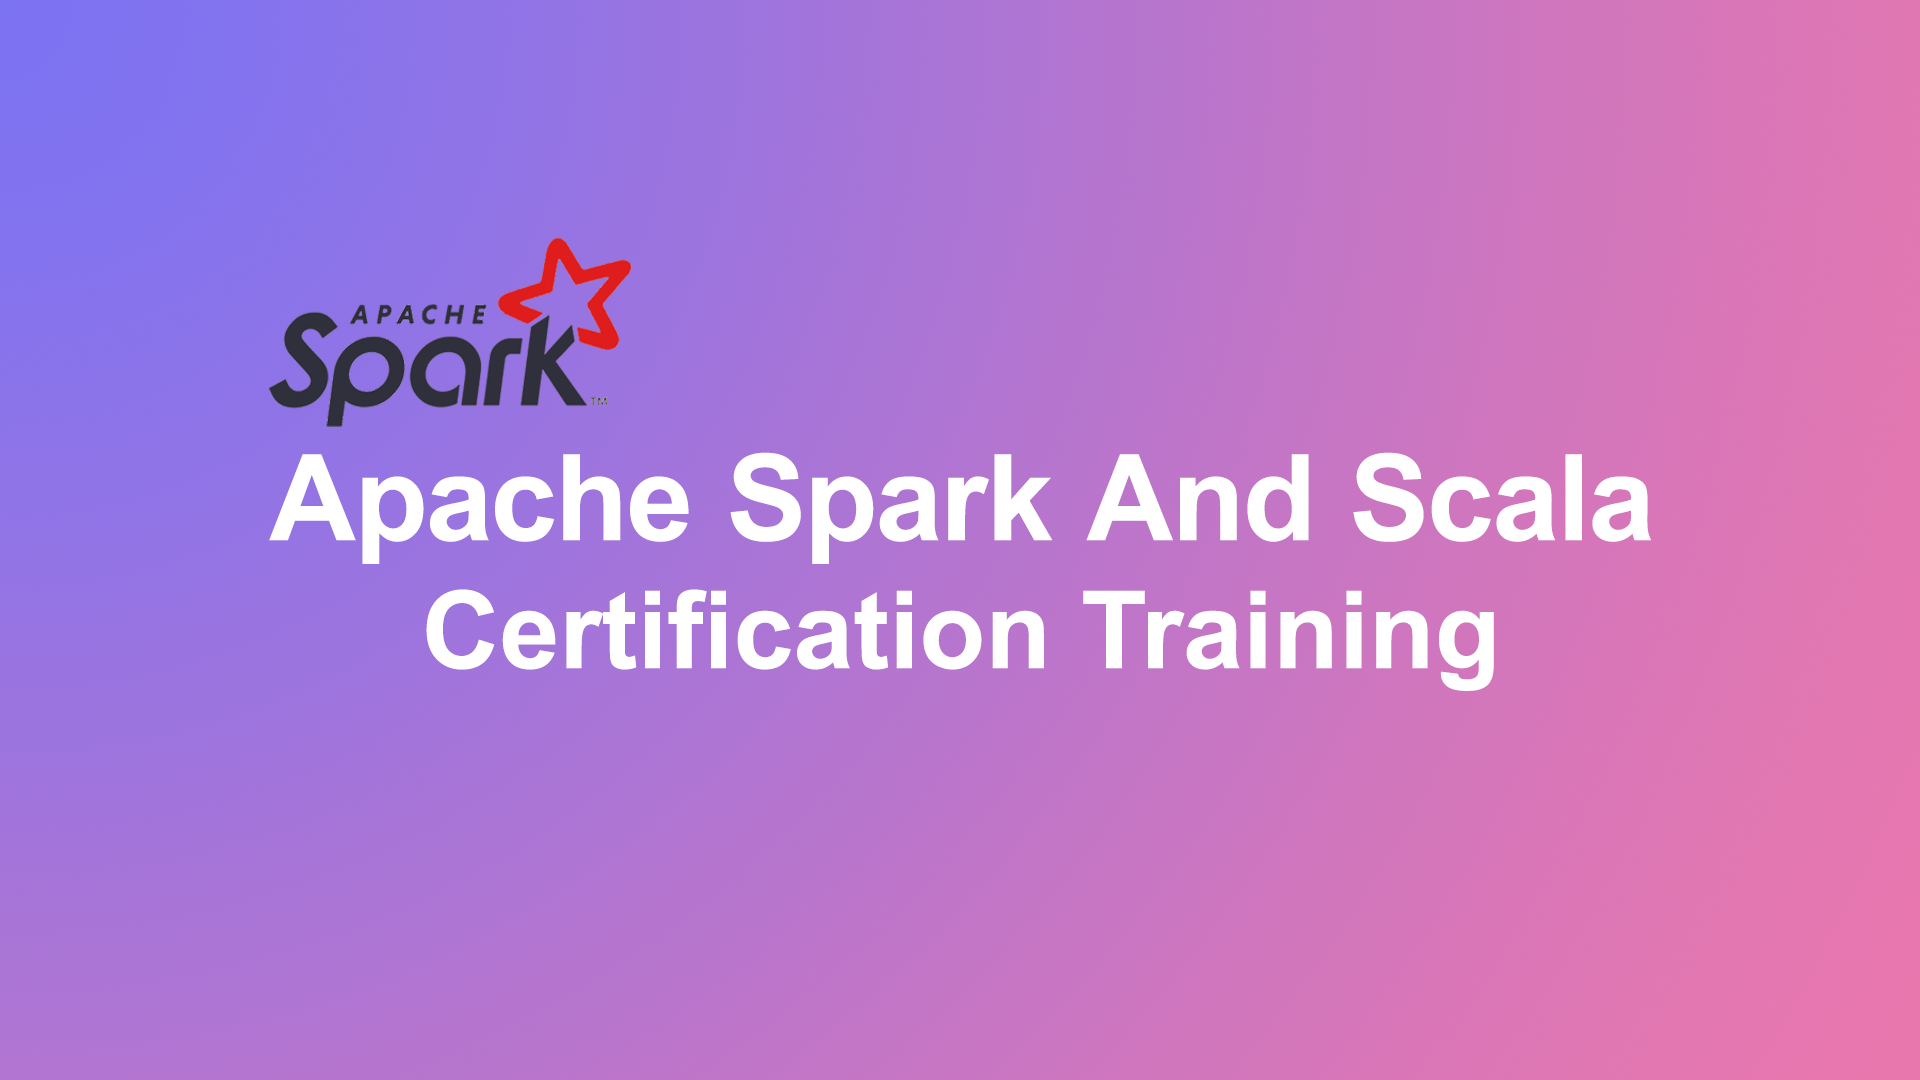 Apache Spark and Scala Training